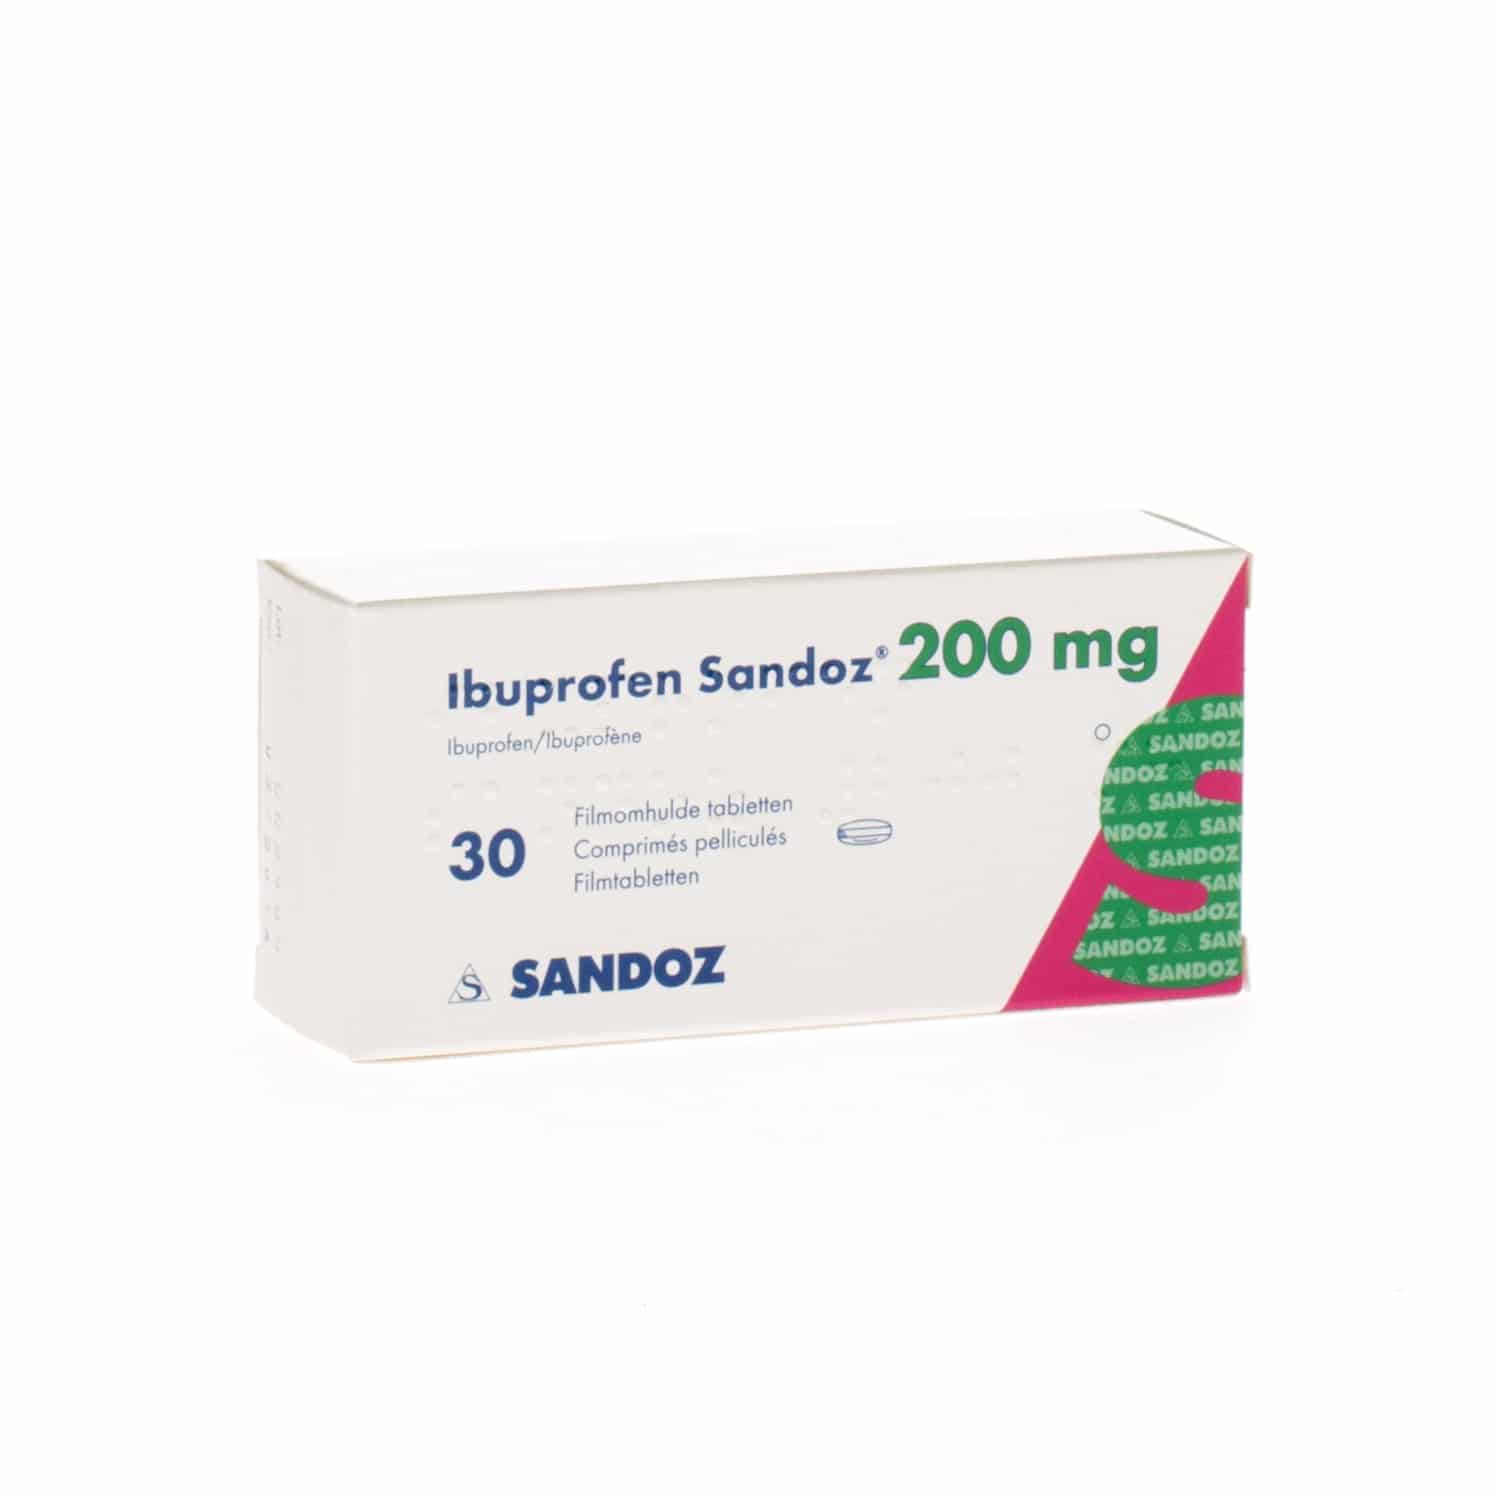 Ibuprofen Sandoz 200 mg